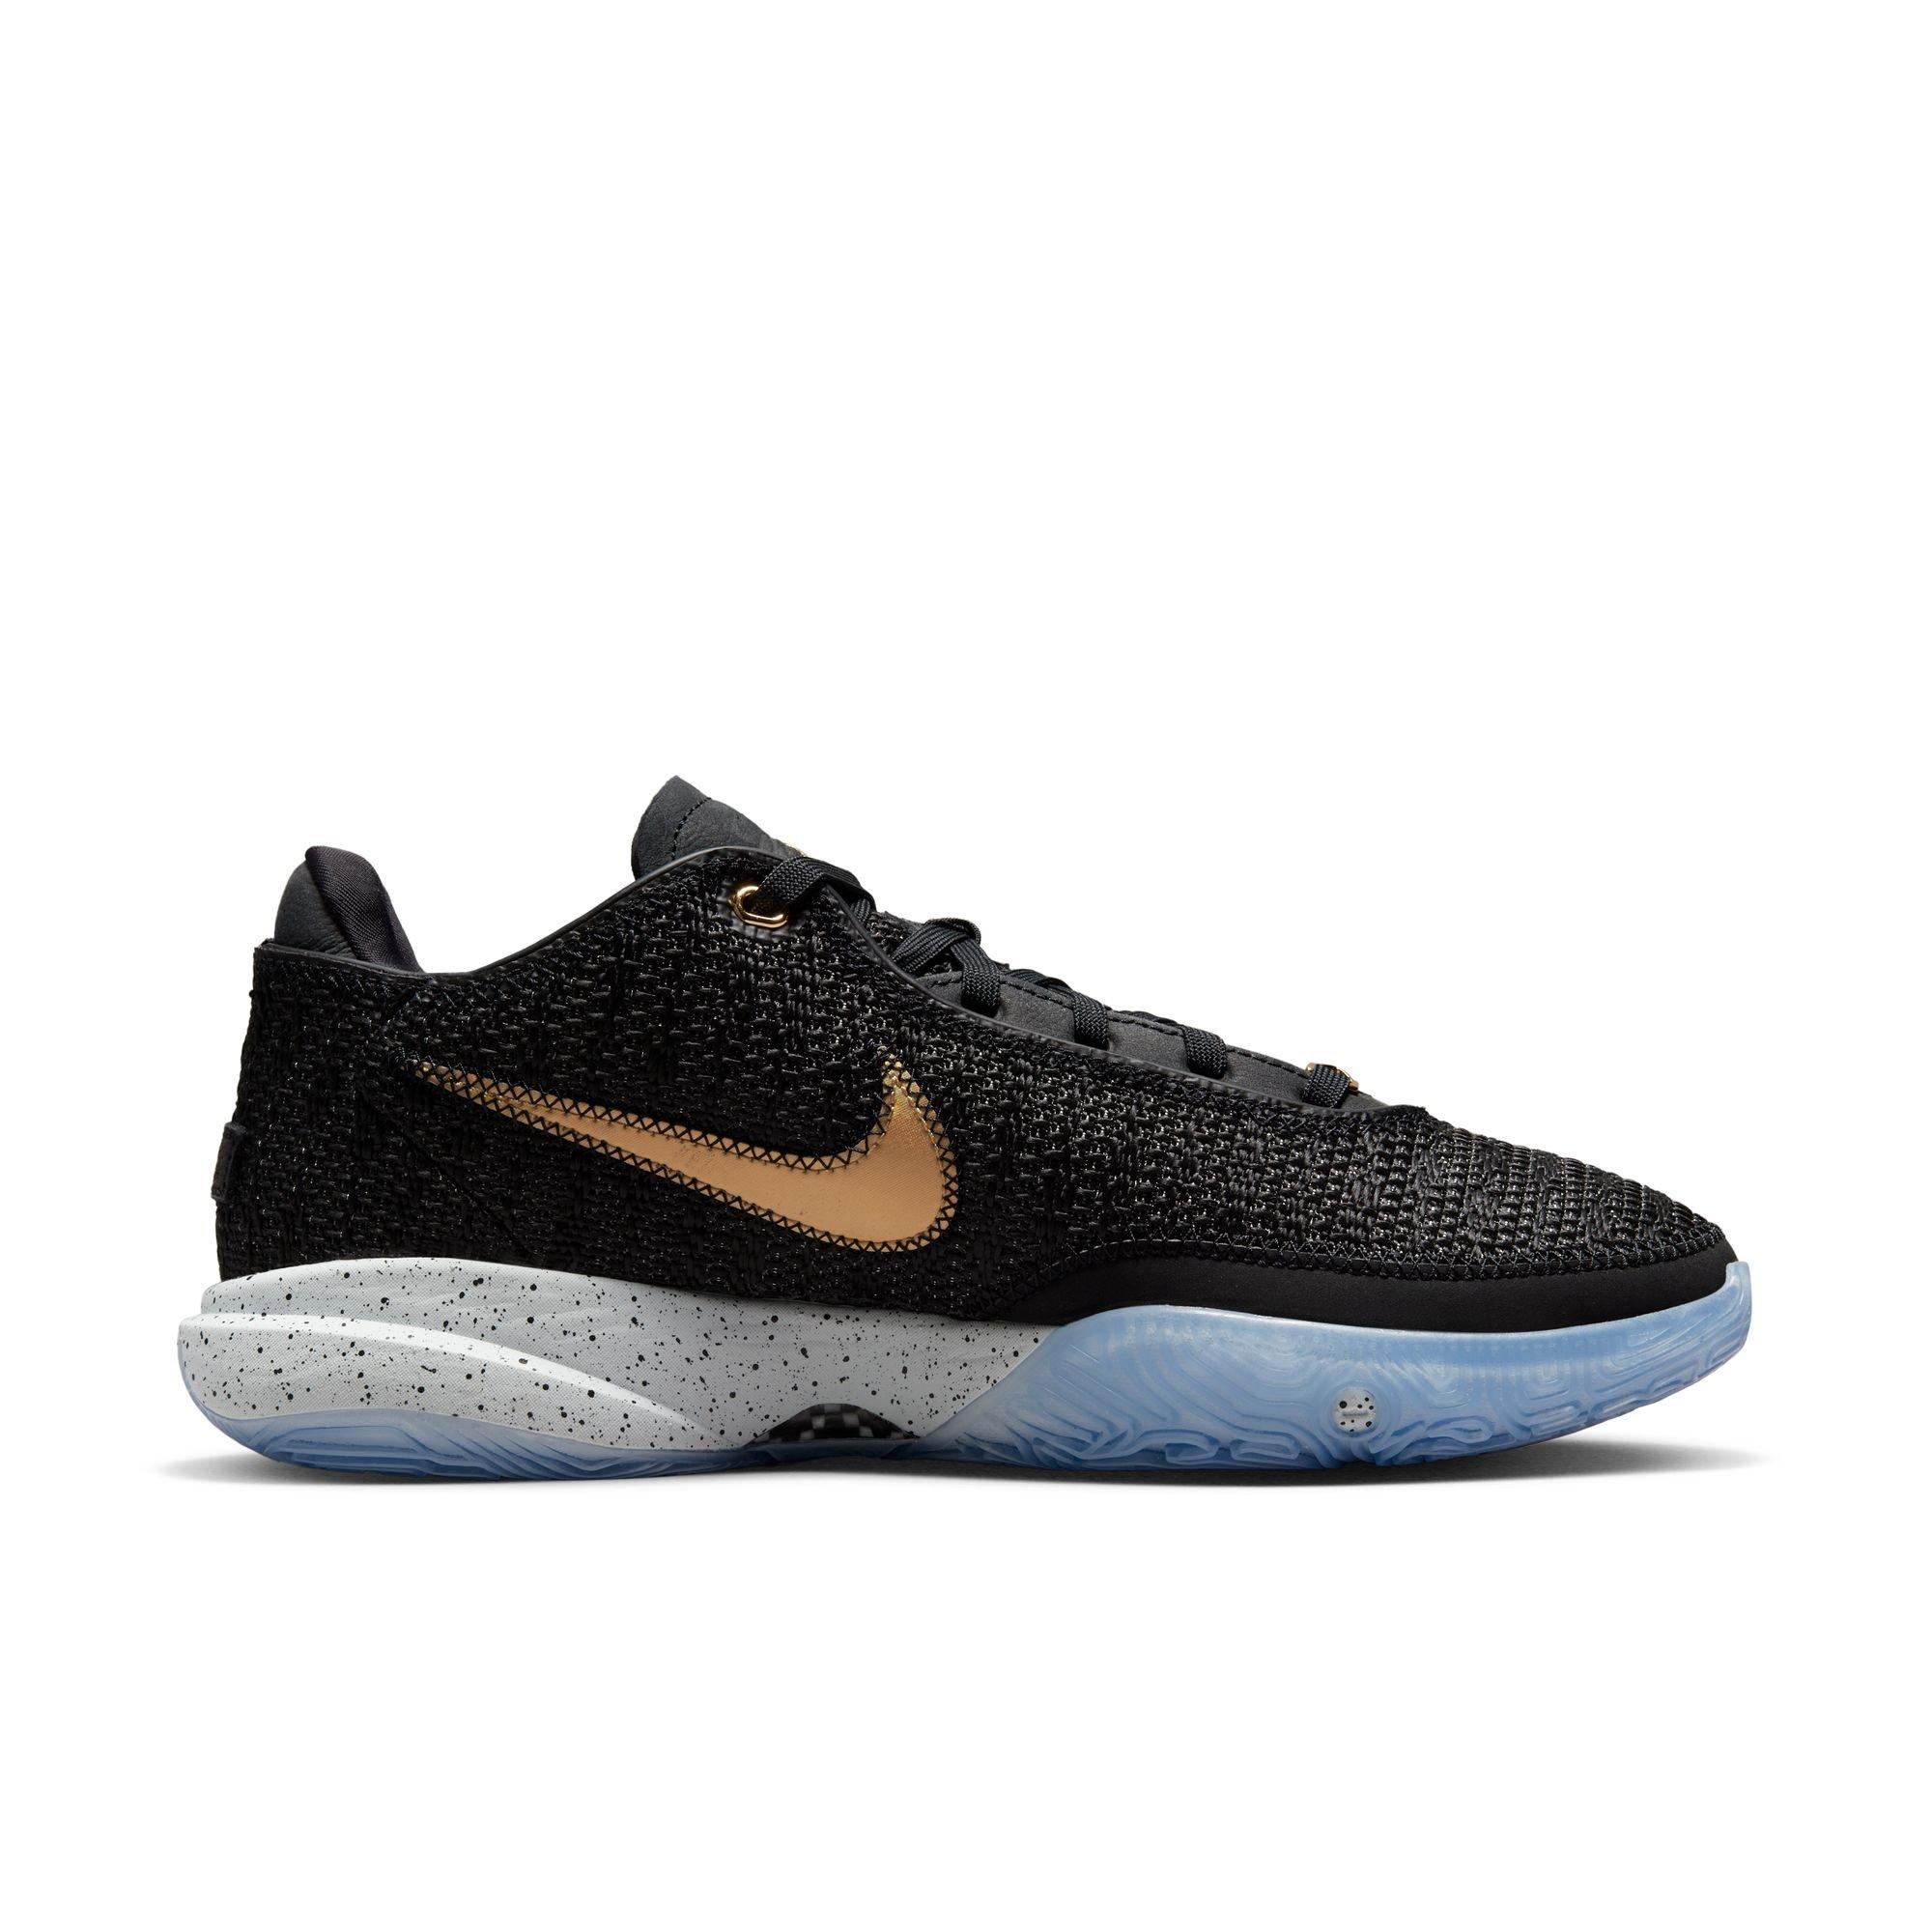 Nike LeBron "Black/Metallic Gold/White" Men's Basketball Shoe